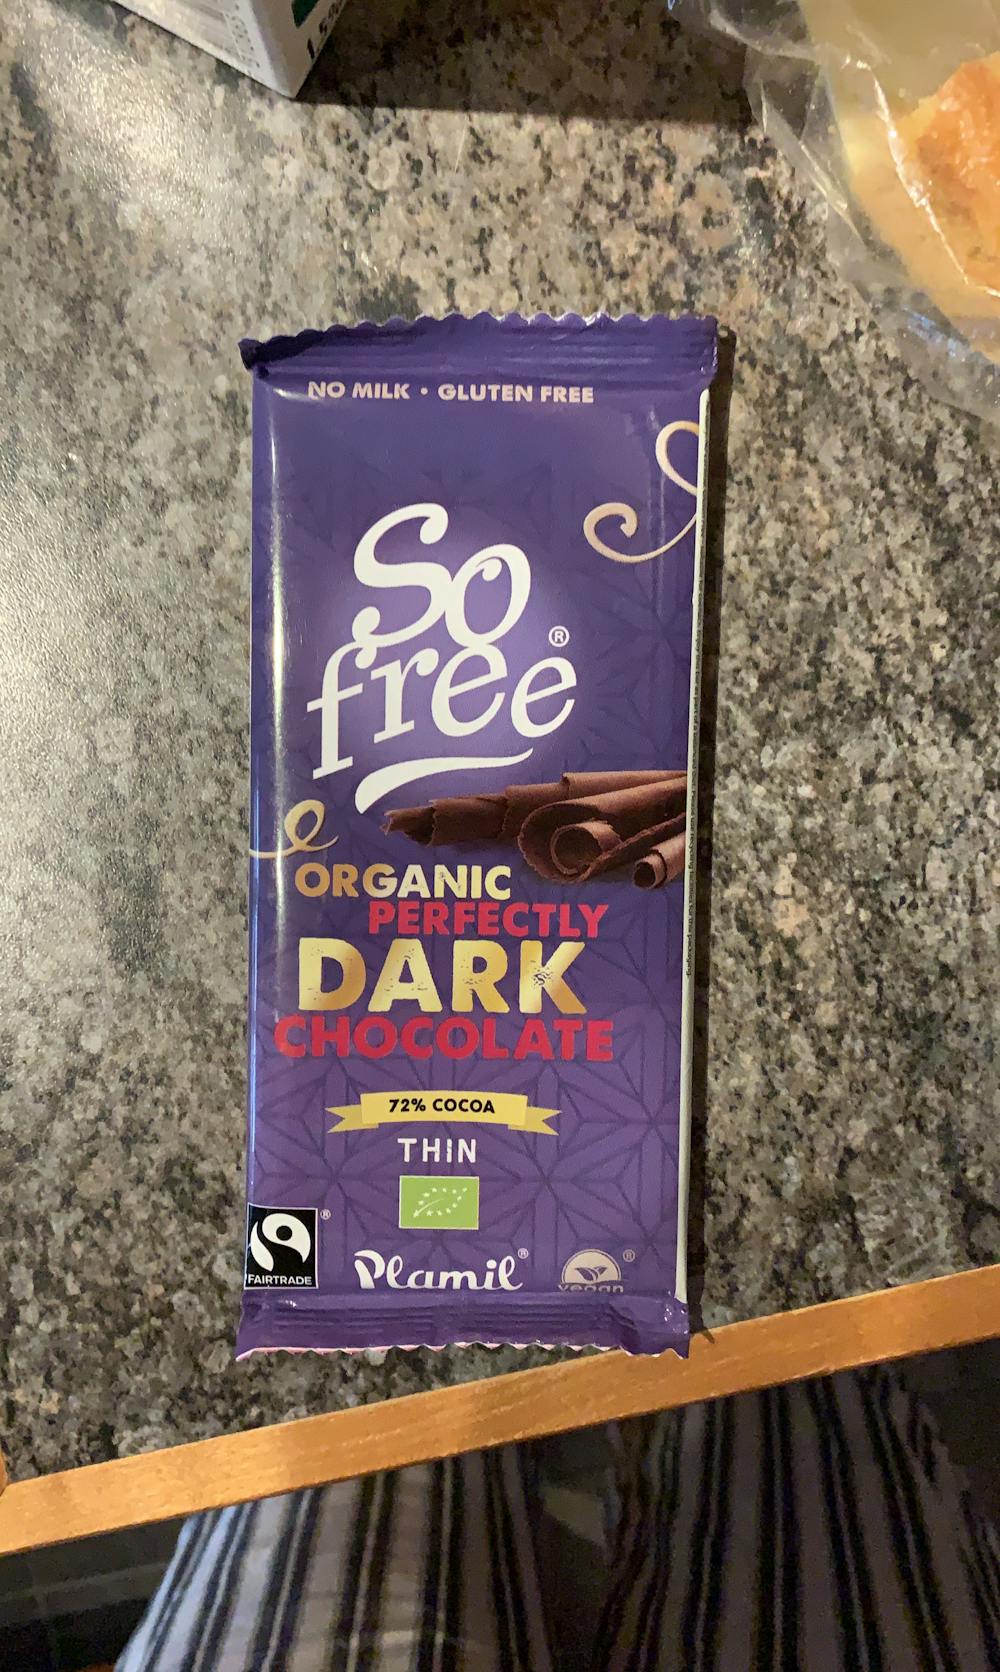 Organic dark chocolate, So free